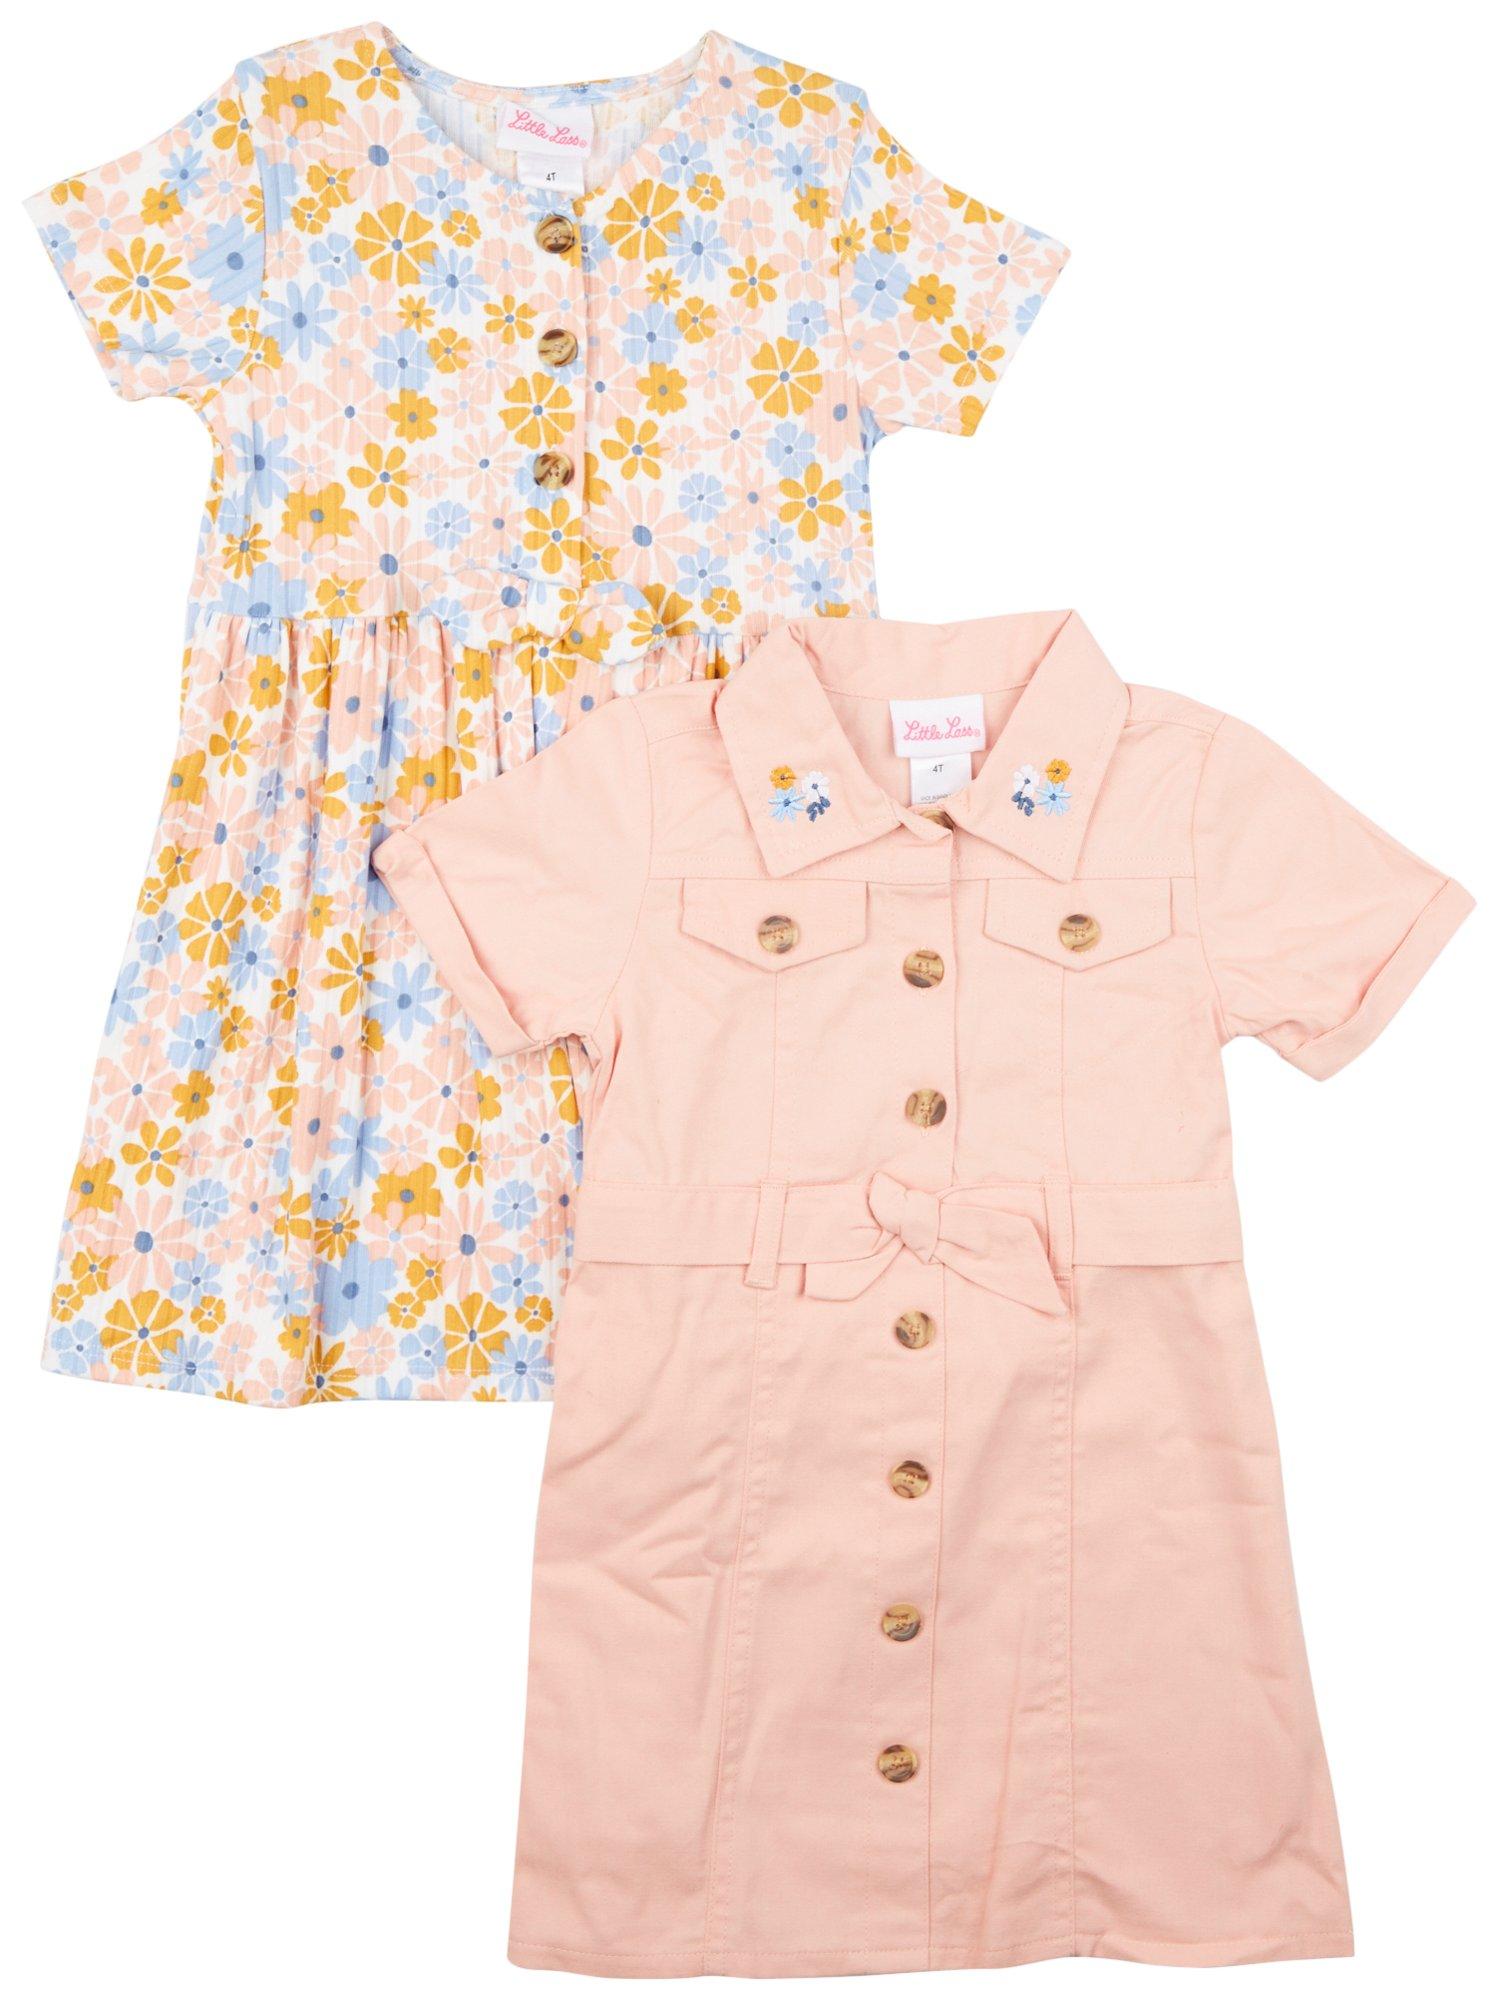 Toddler Girls 2 Pc. Knit & Twill Dress Set